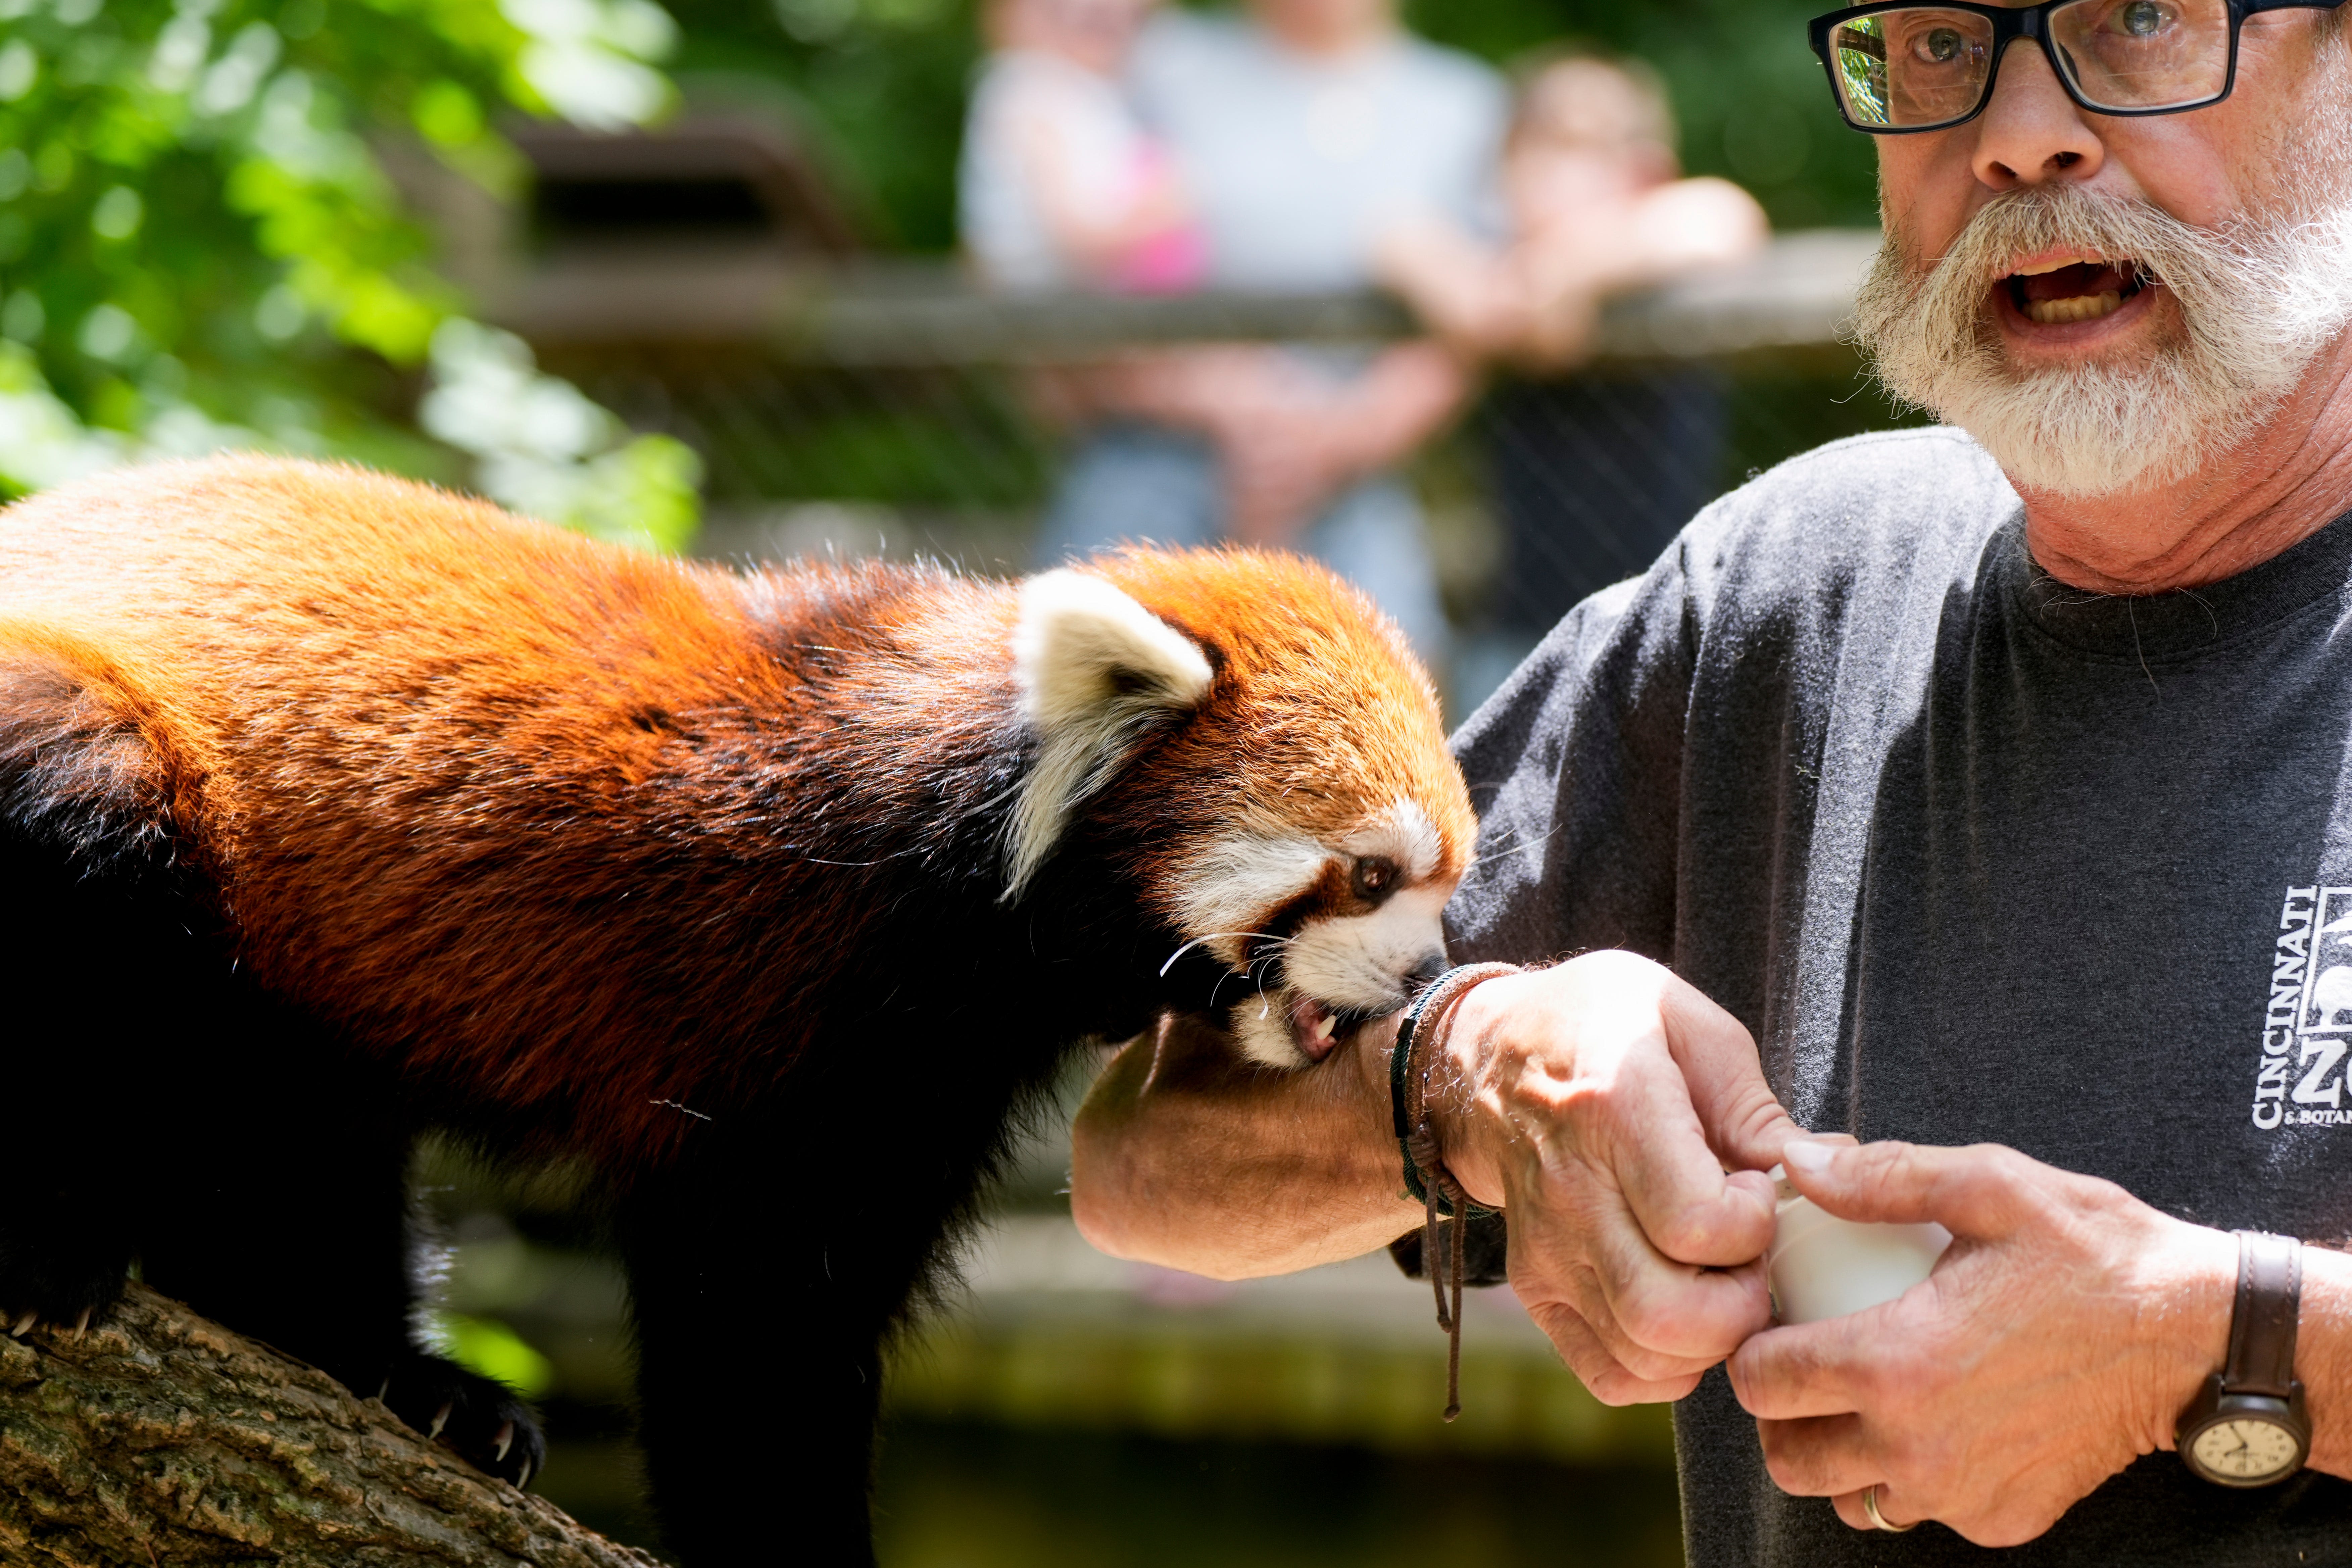 We met red pandas at the Cincinnati Zoo. I was terrified. Then I wasn't